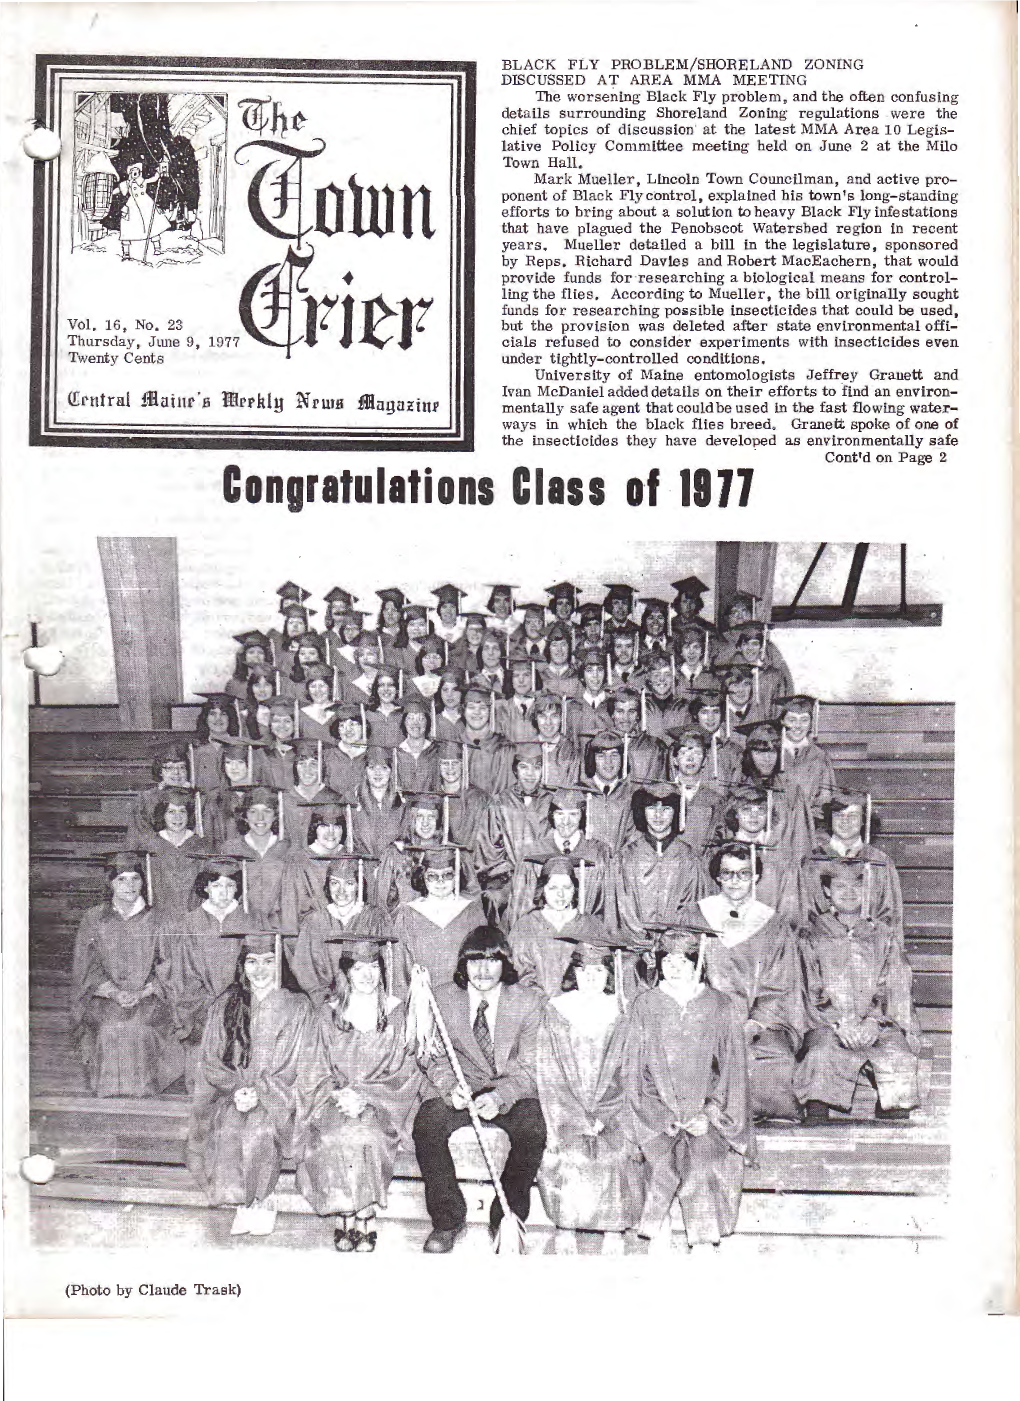 Congratulations Class A·F 1877